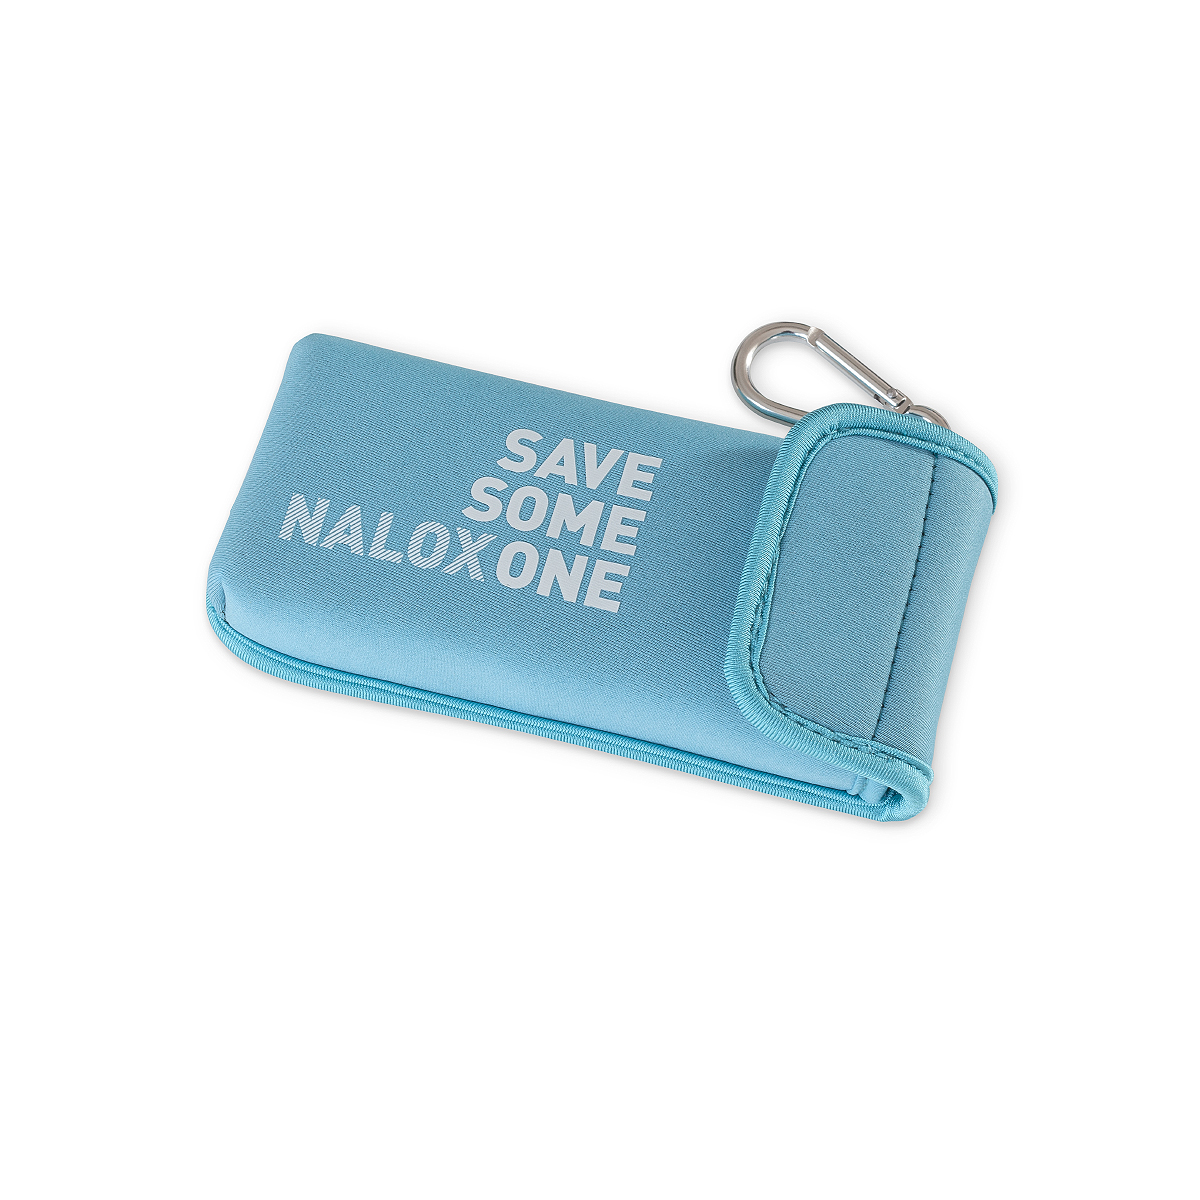 Naloxone carrying pouch 